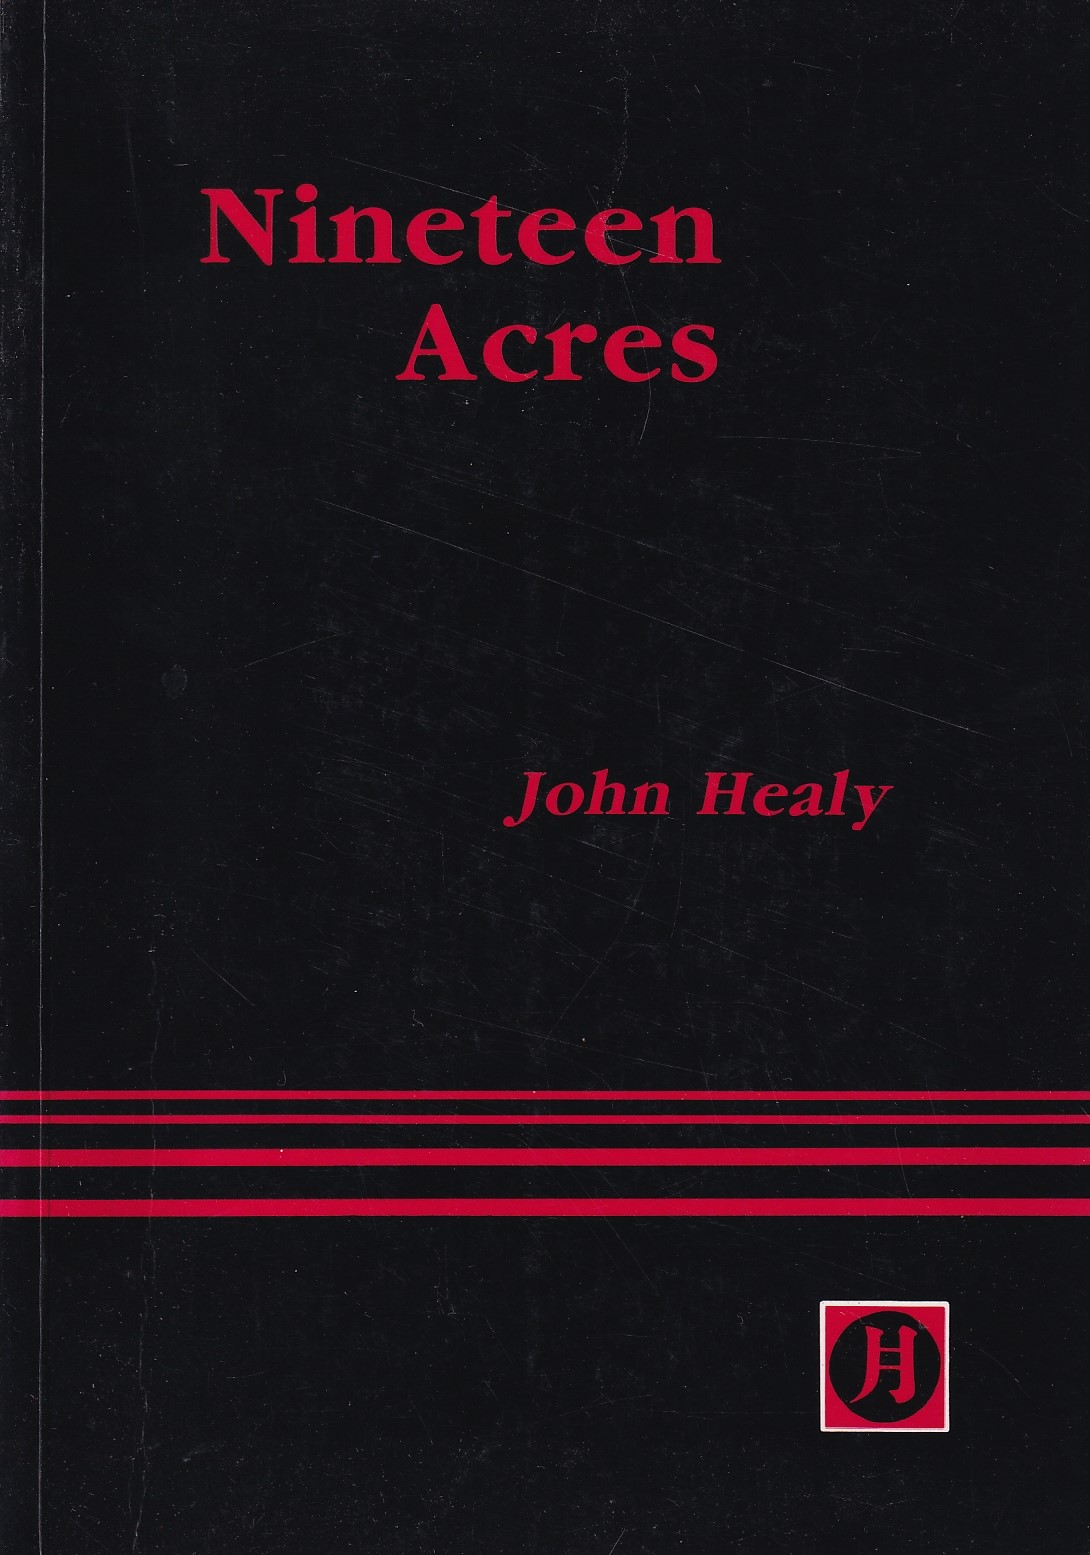 Nineteen Acres by John Healy